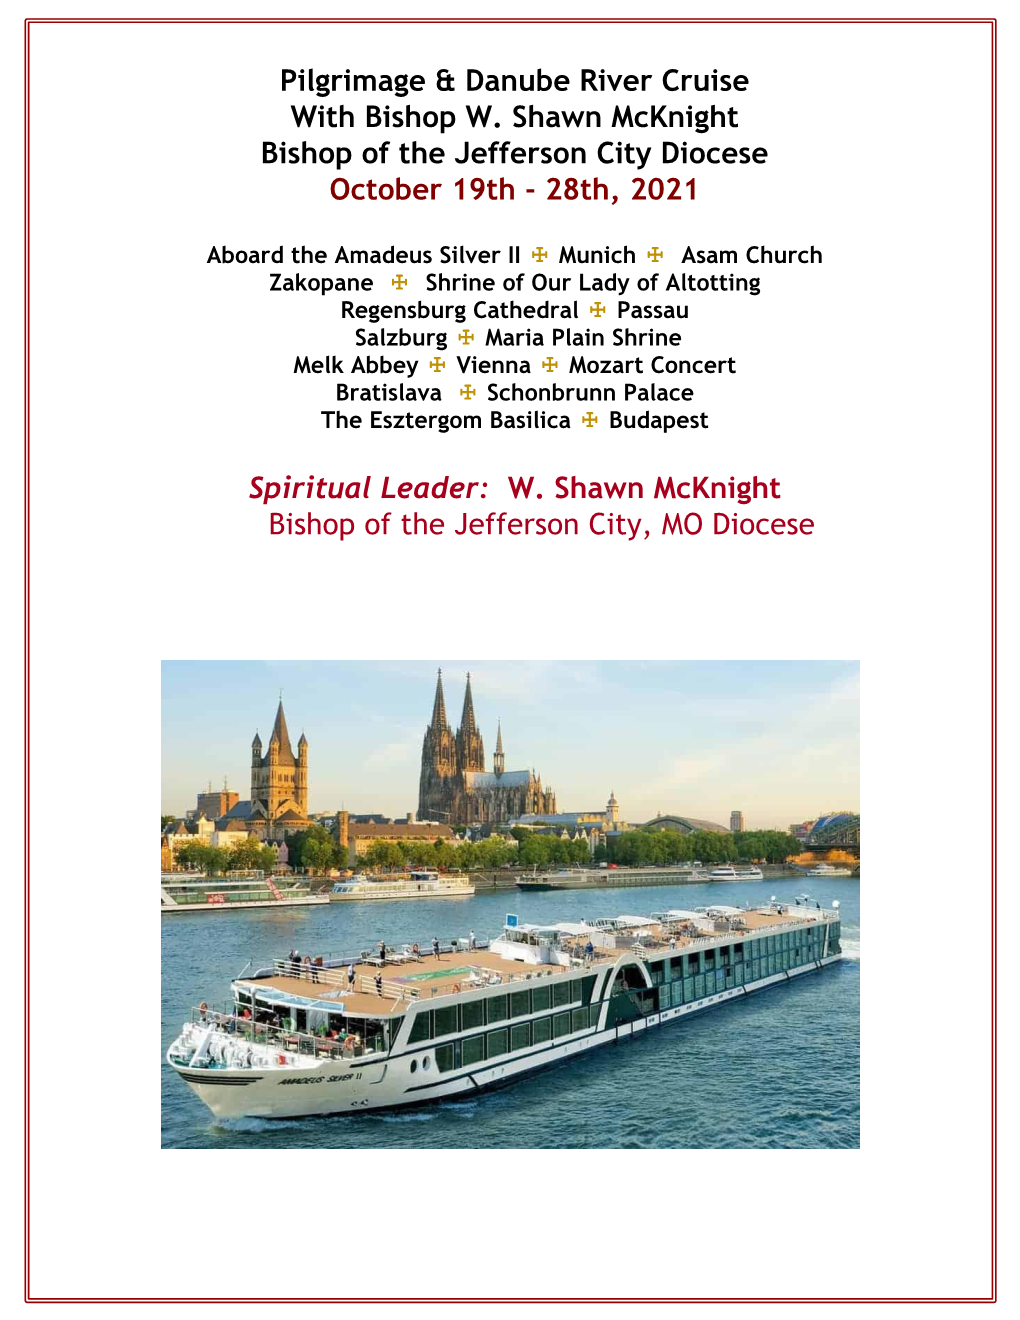 Pilgrimage & Danube River Cruise with Bishop W. Shawn Mcknight